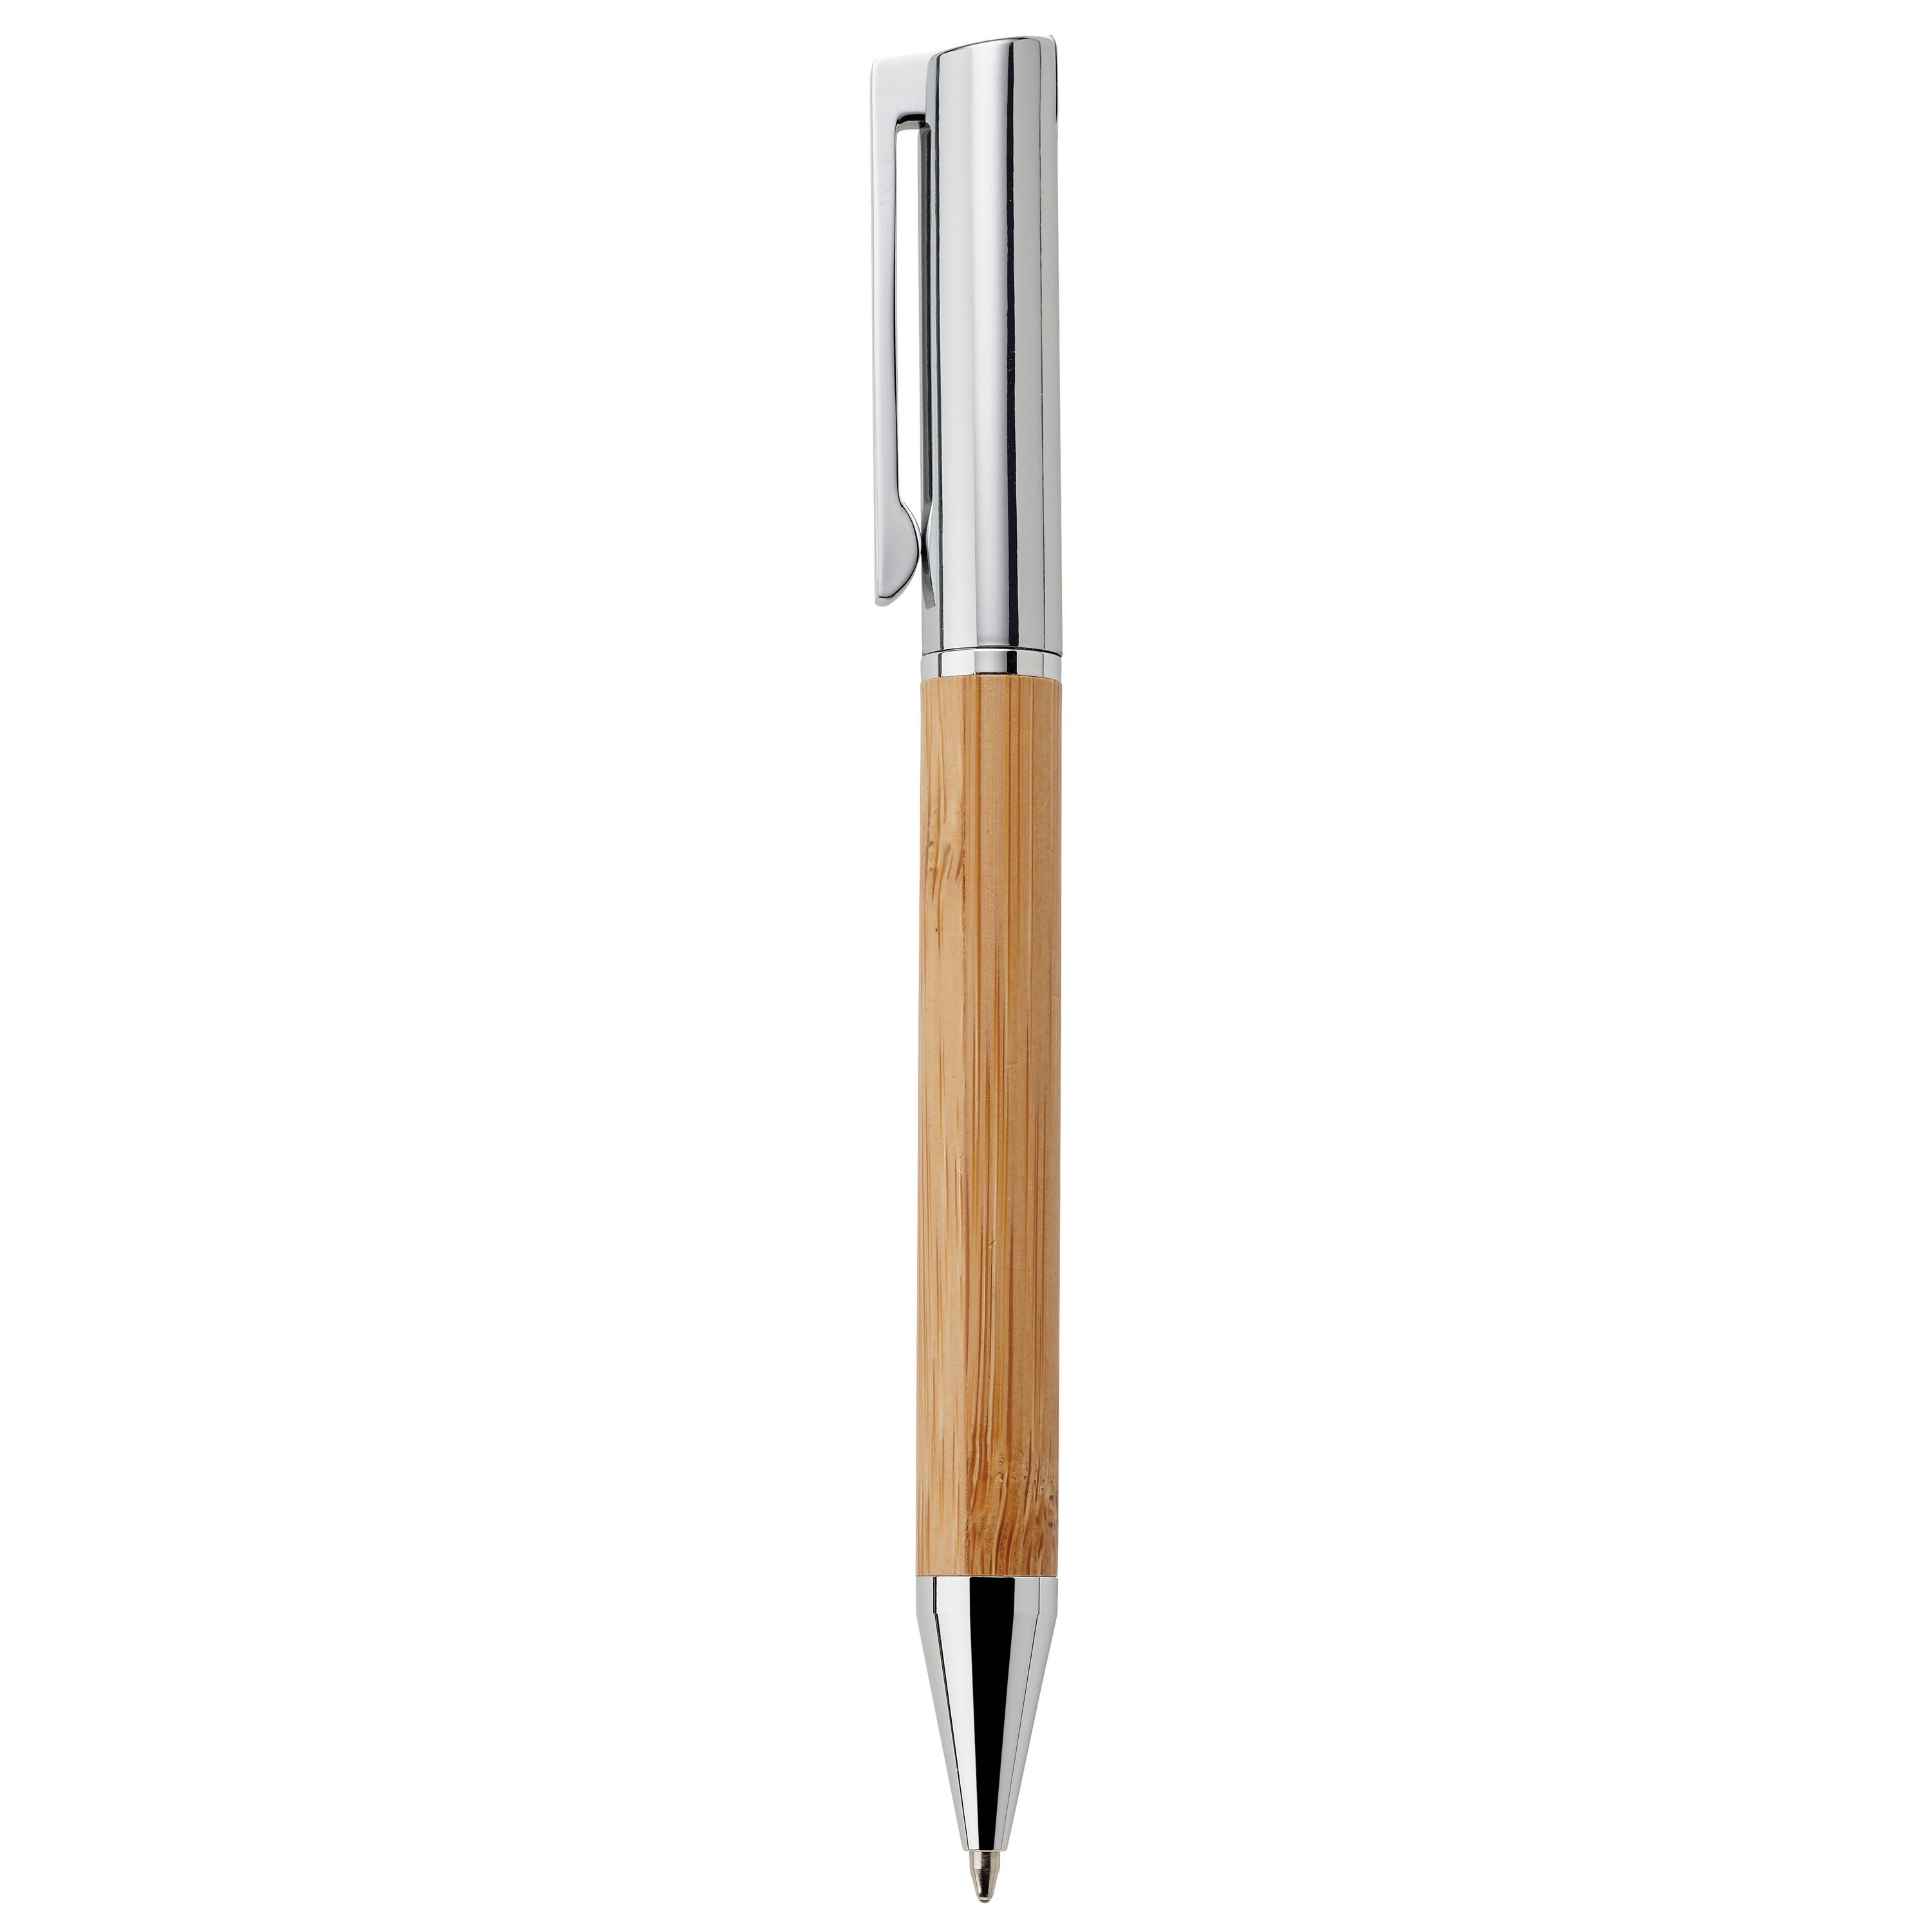 Customized Belmond bamboo ballpoint pen in natural.